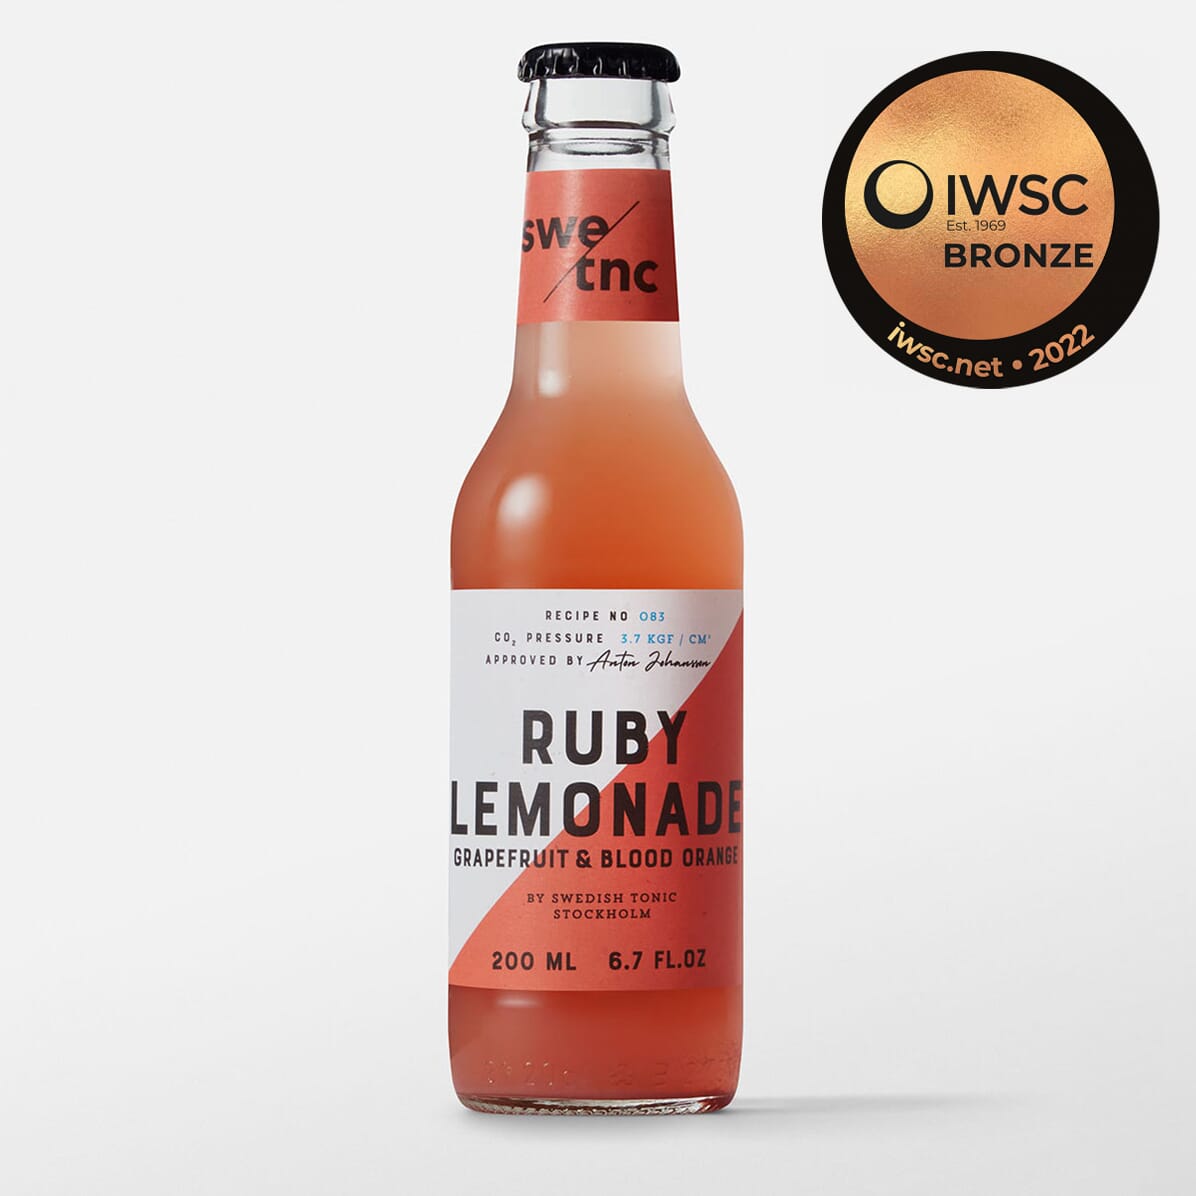 Ruby Lemonade from Swedish Tonic - The perfect mix between blood orange, grapefruit and lemons